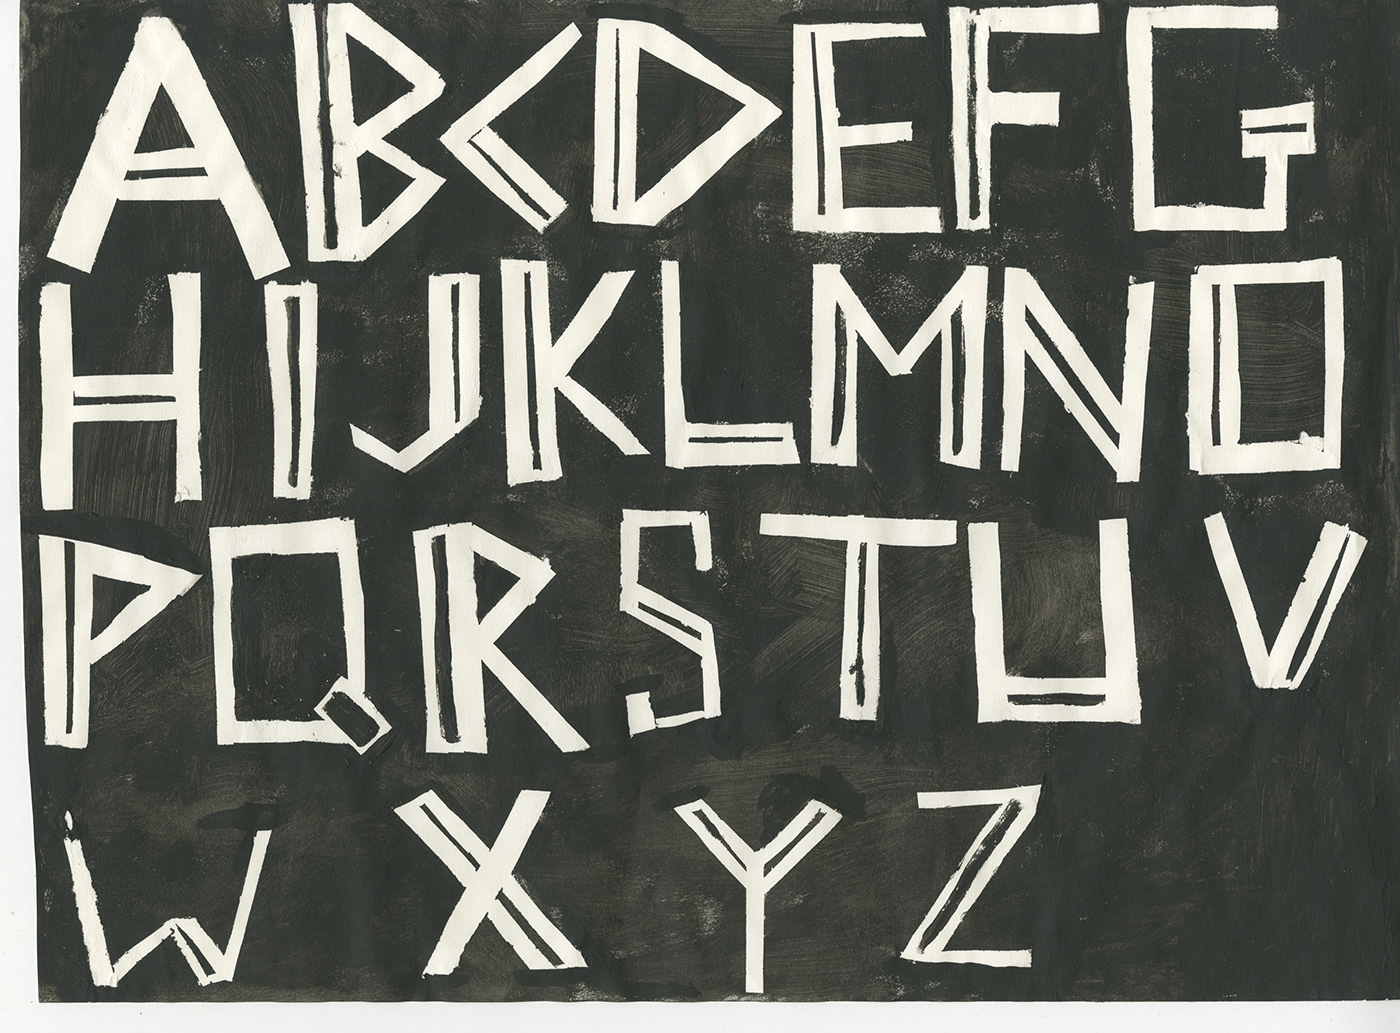 font lettertype